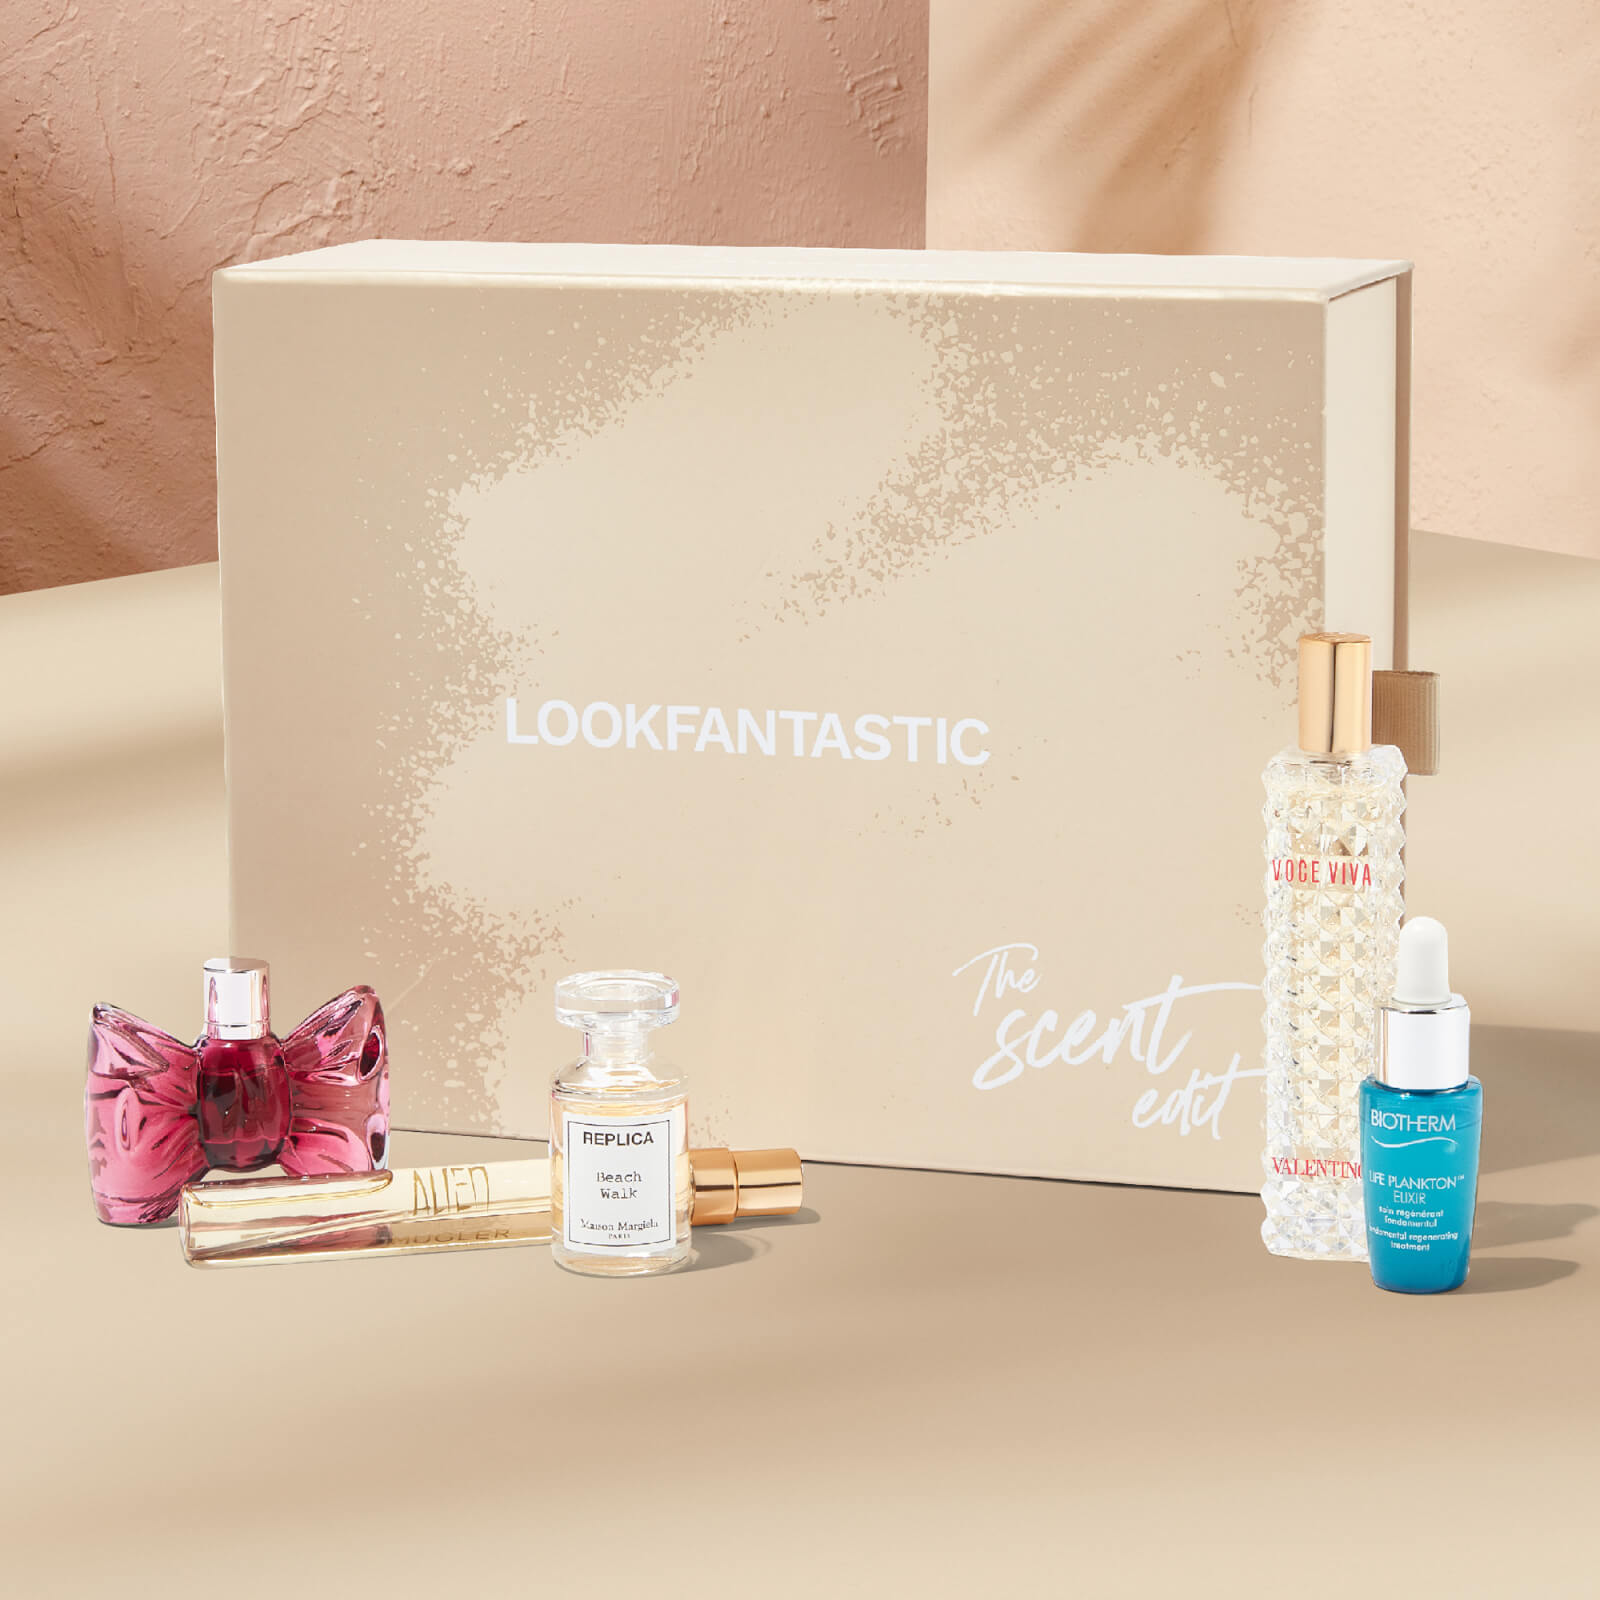 LOOKFANTASTIC Beauty Box Limited Edition - National Perfume Week